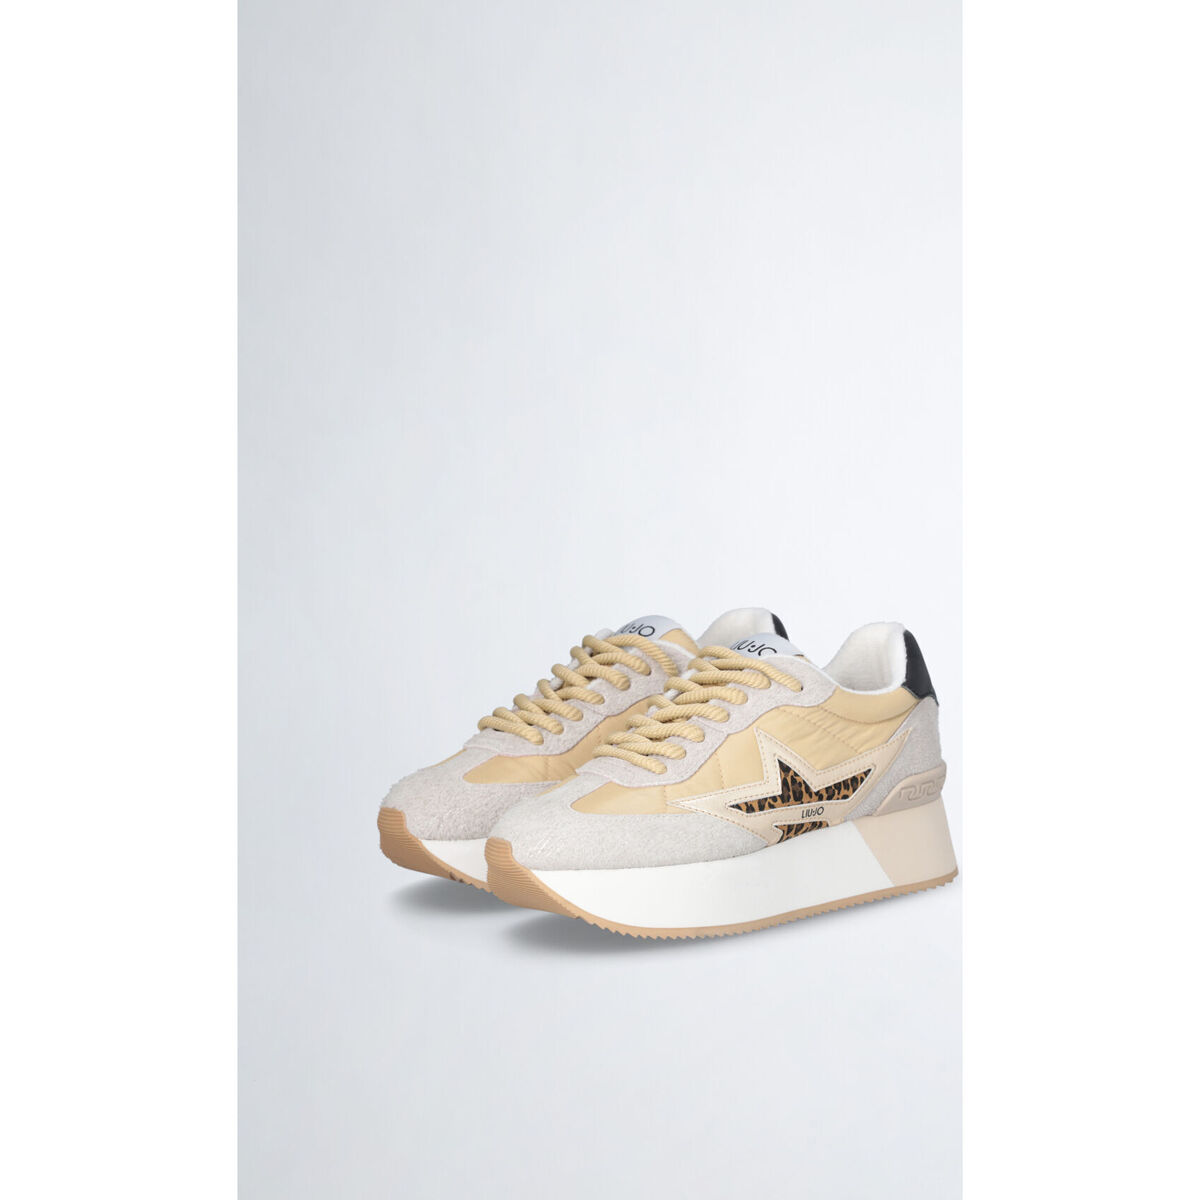 Liu Jo Gris Sneakers plateforme avec étoile animalier U5XyxtPv